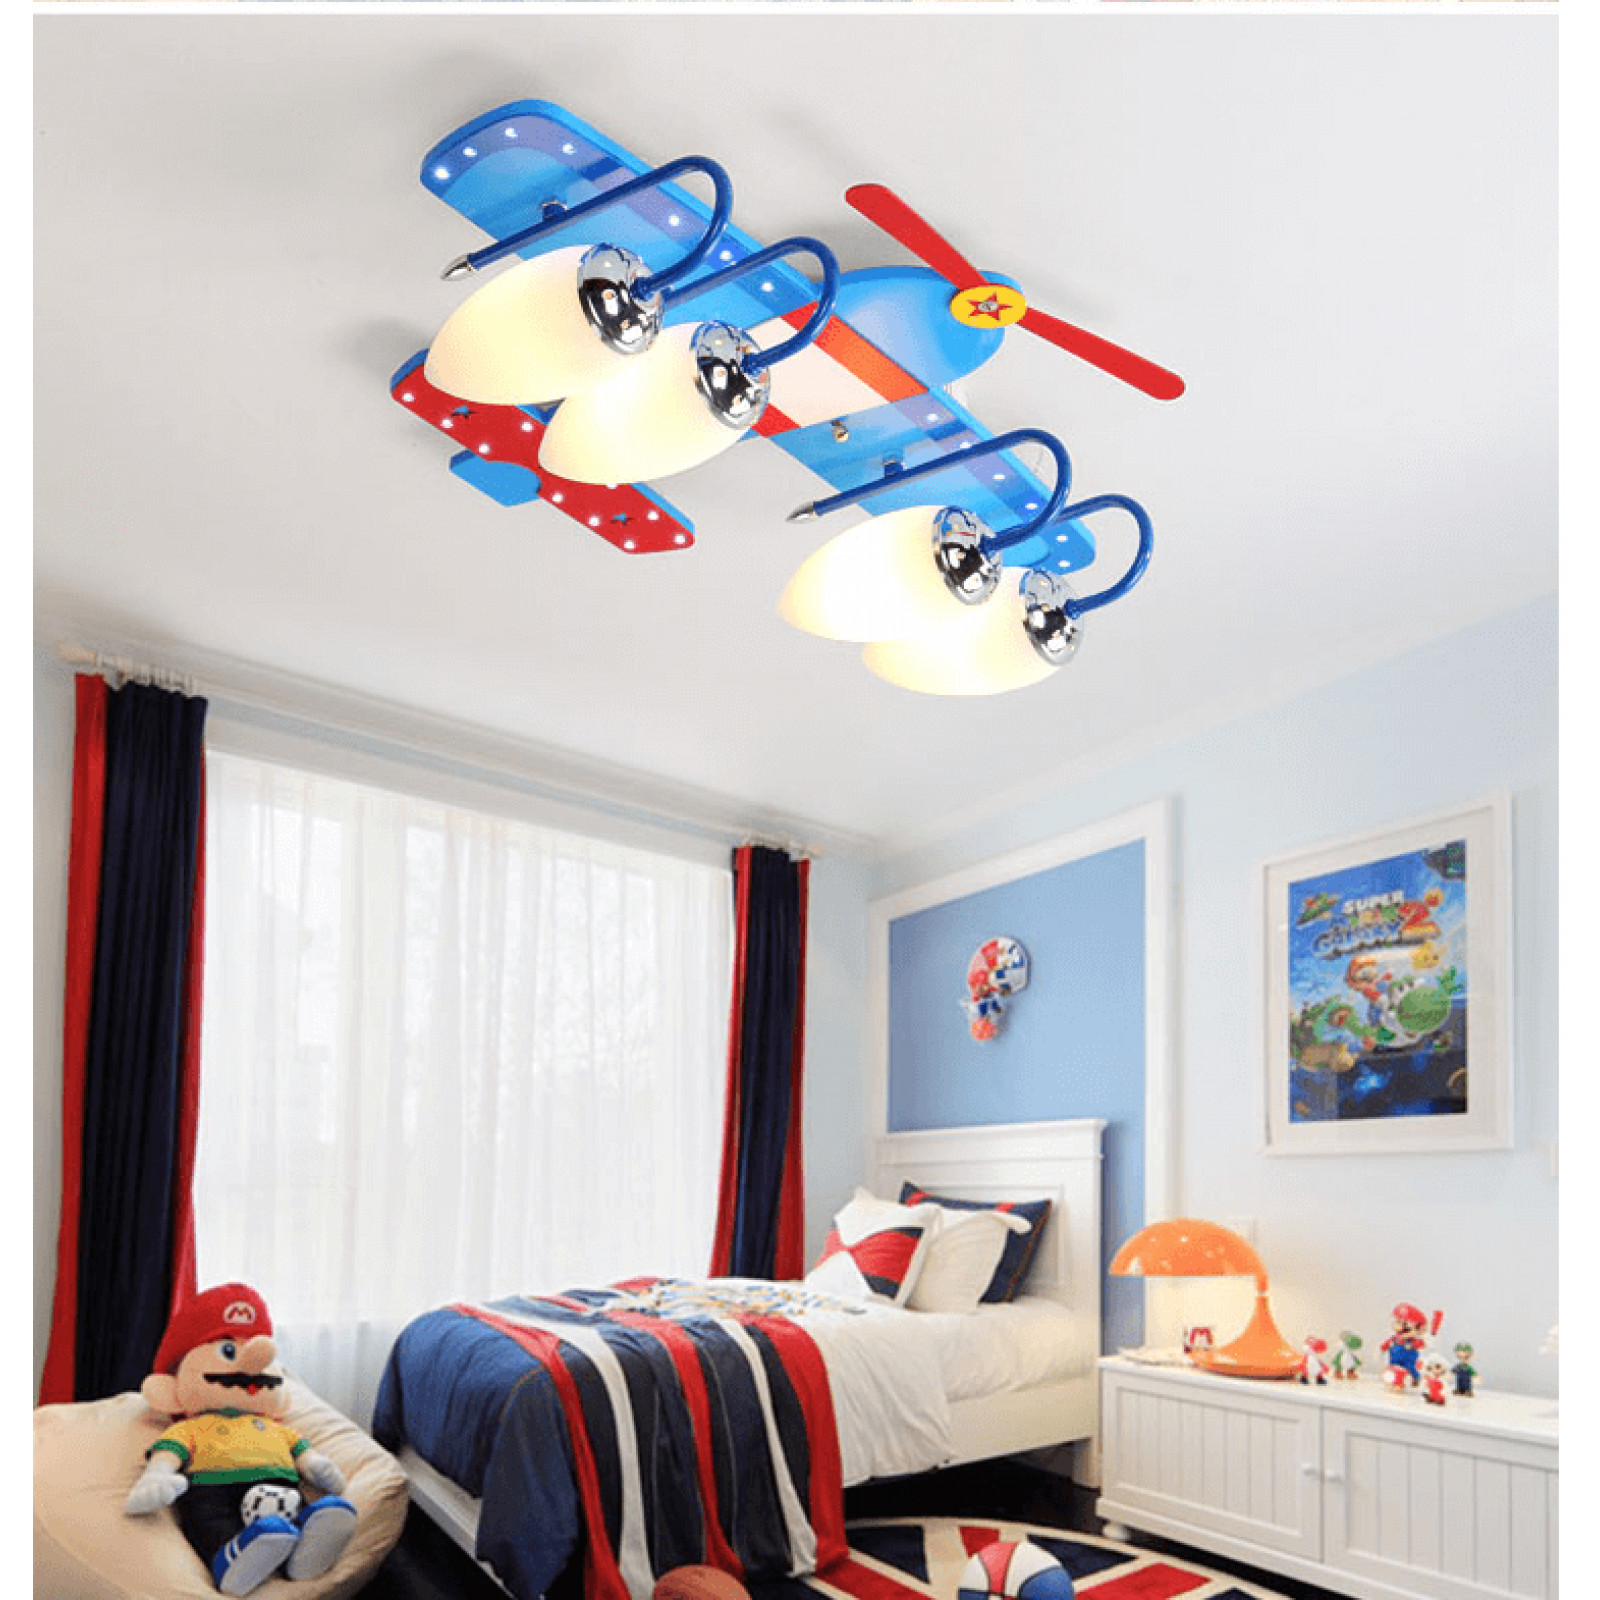 Kids Room Pendant Light
 ceiling lights led childrens celling lights kids ceiling